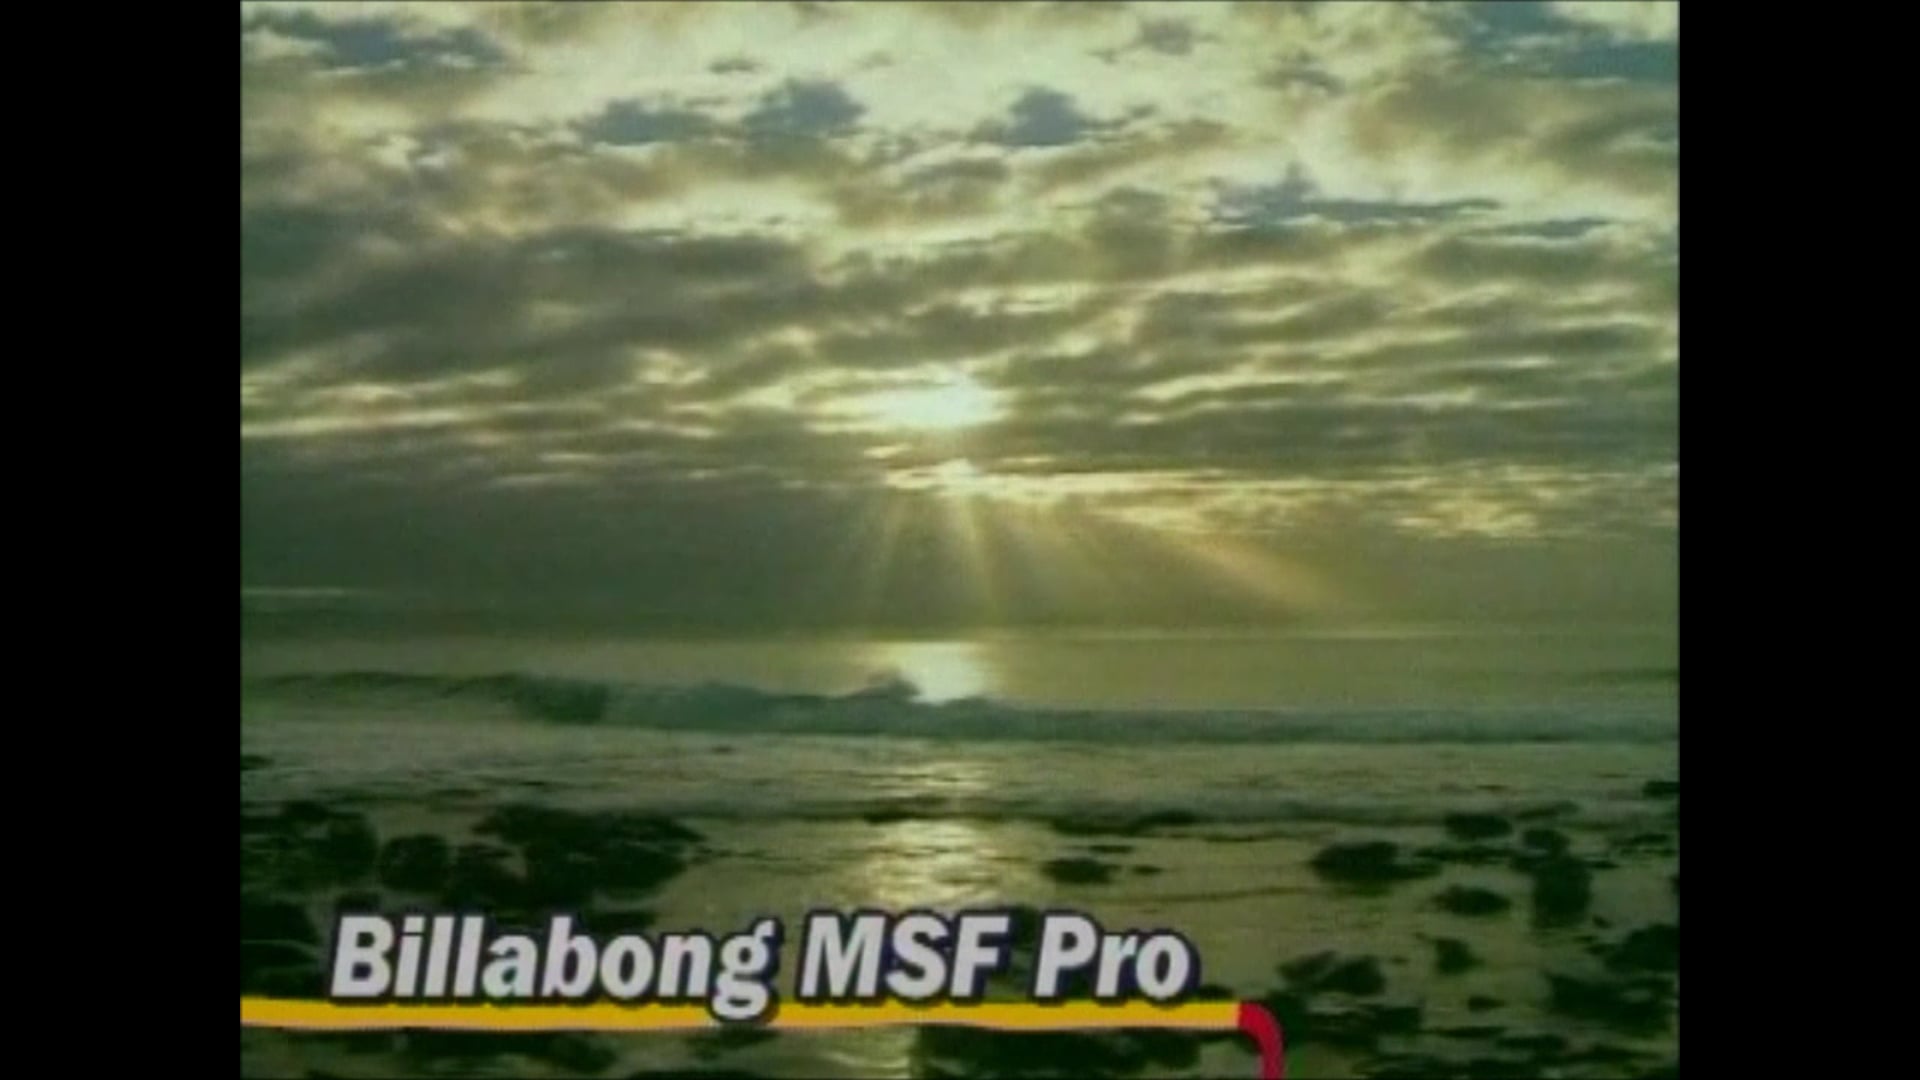 Surfing History: 99 Billabong MSF Pro